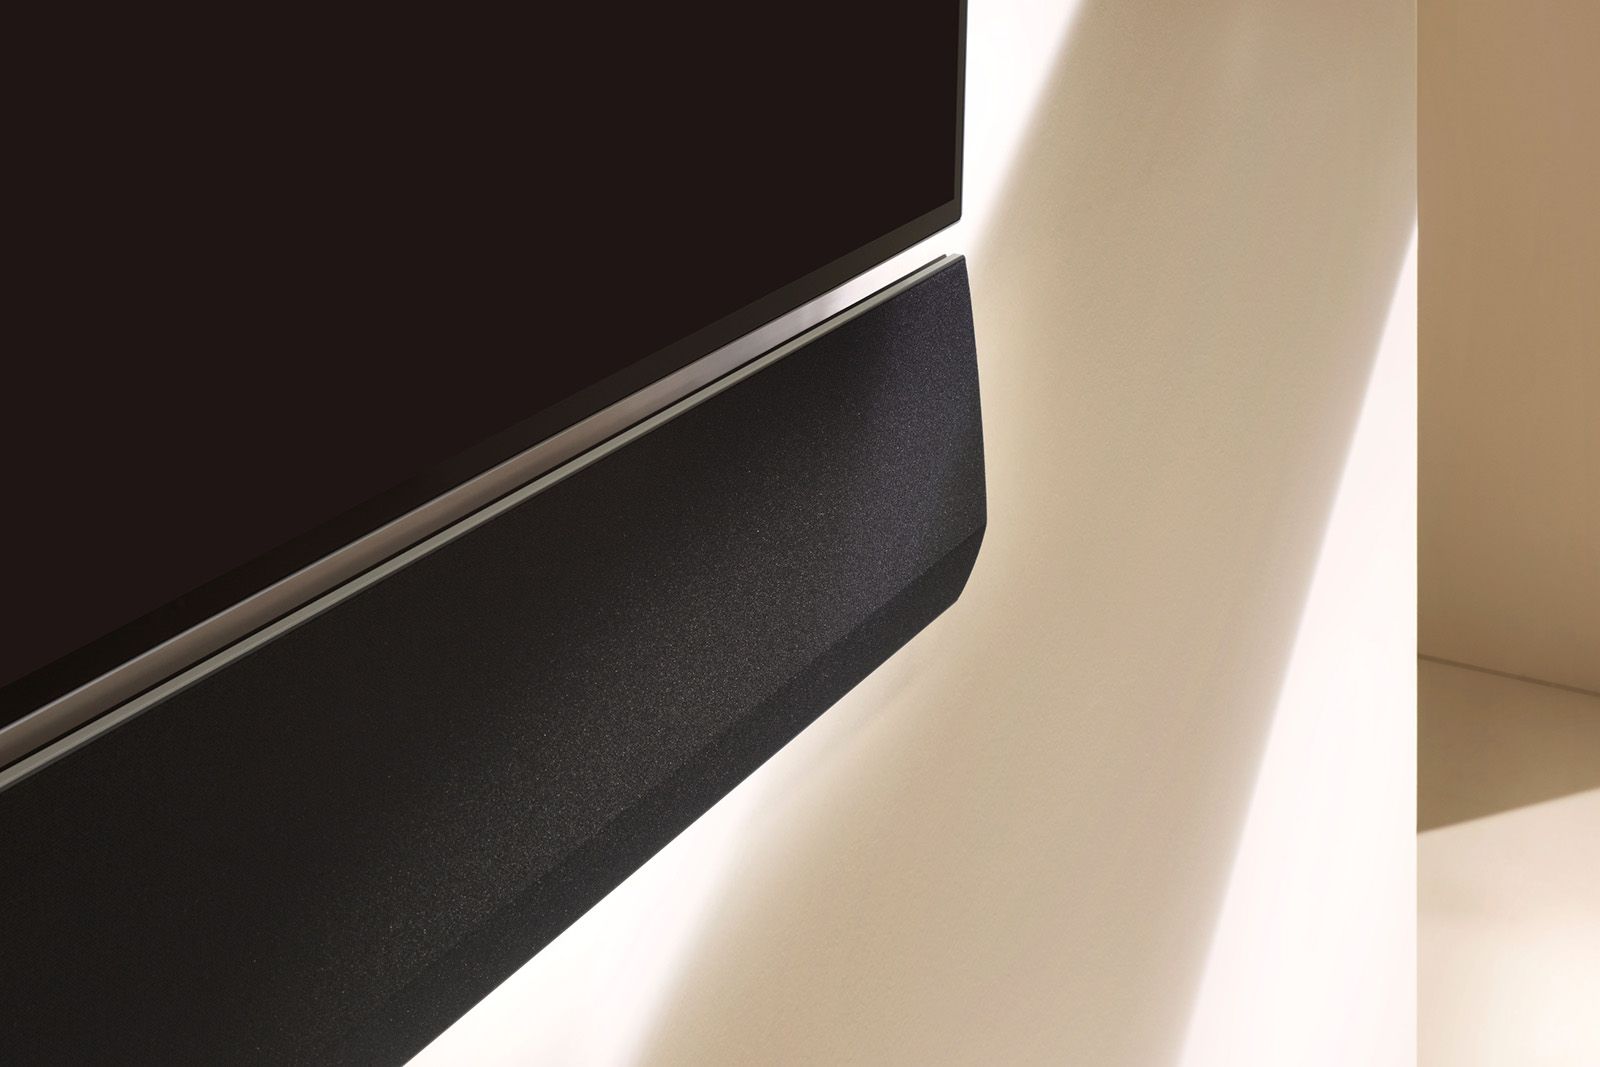 LG GX soundbar sits flush to wall to match Gallery OLED TVs photo 1